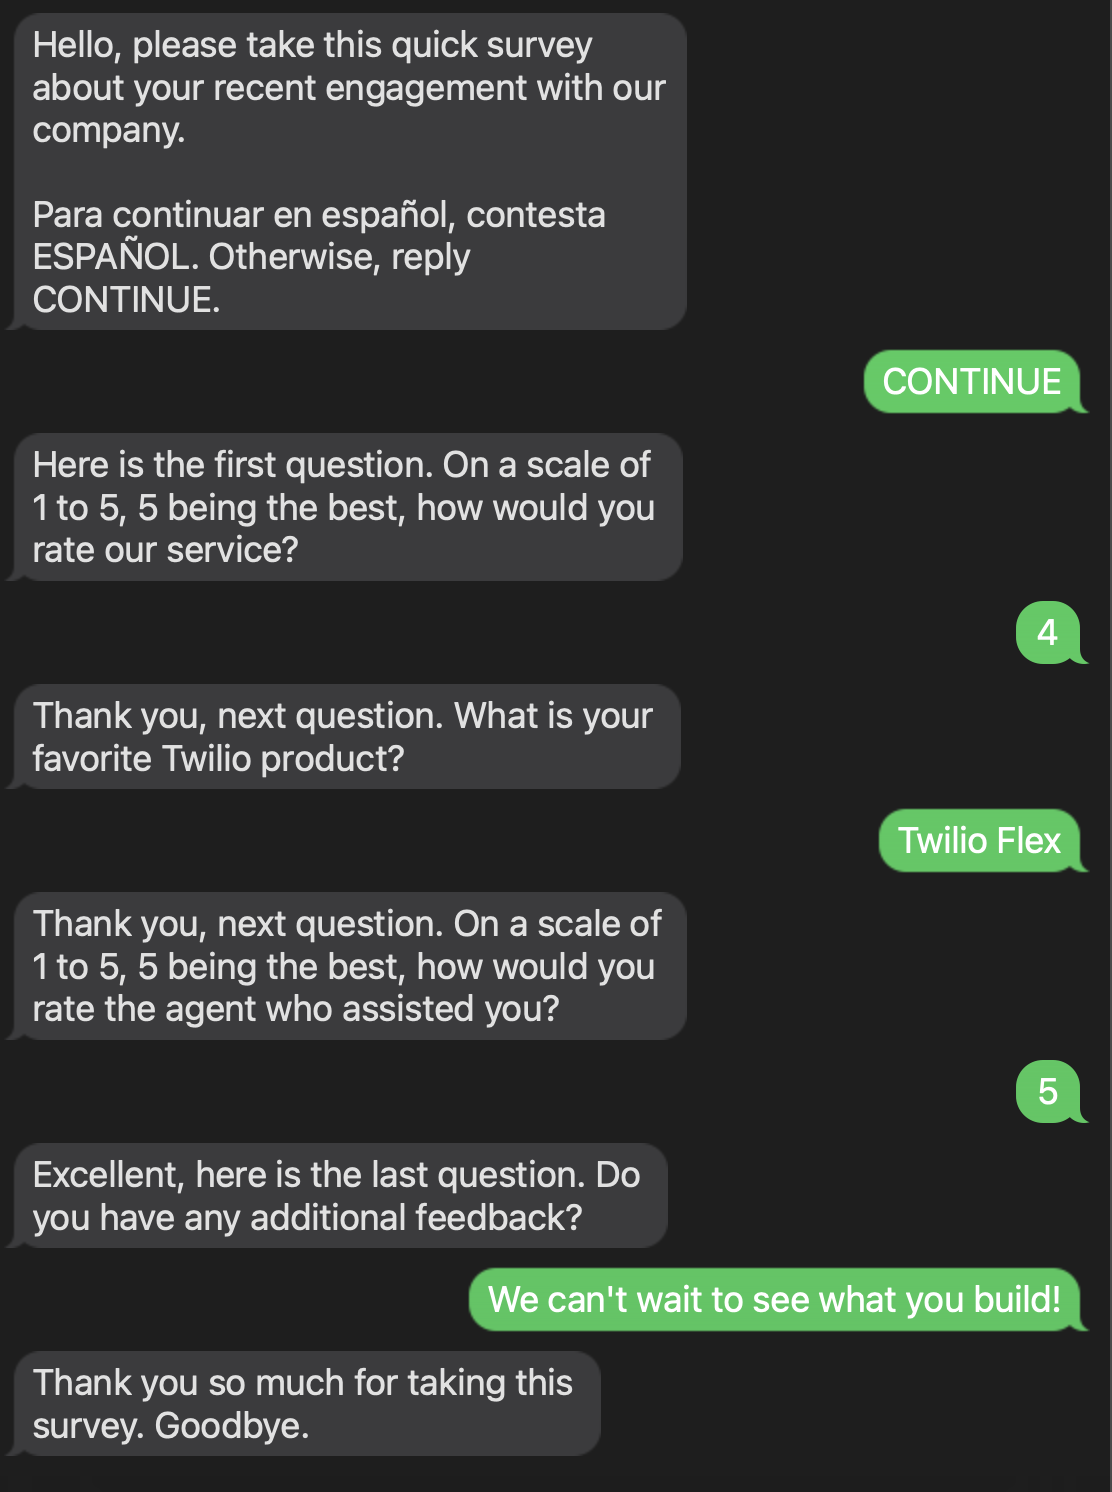 Sample serverless SMS survey responses with AWS and Twilio